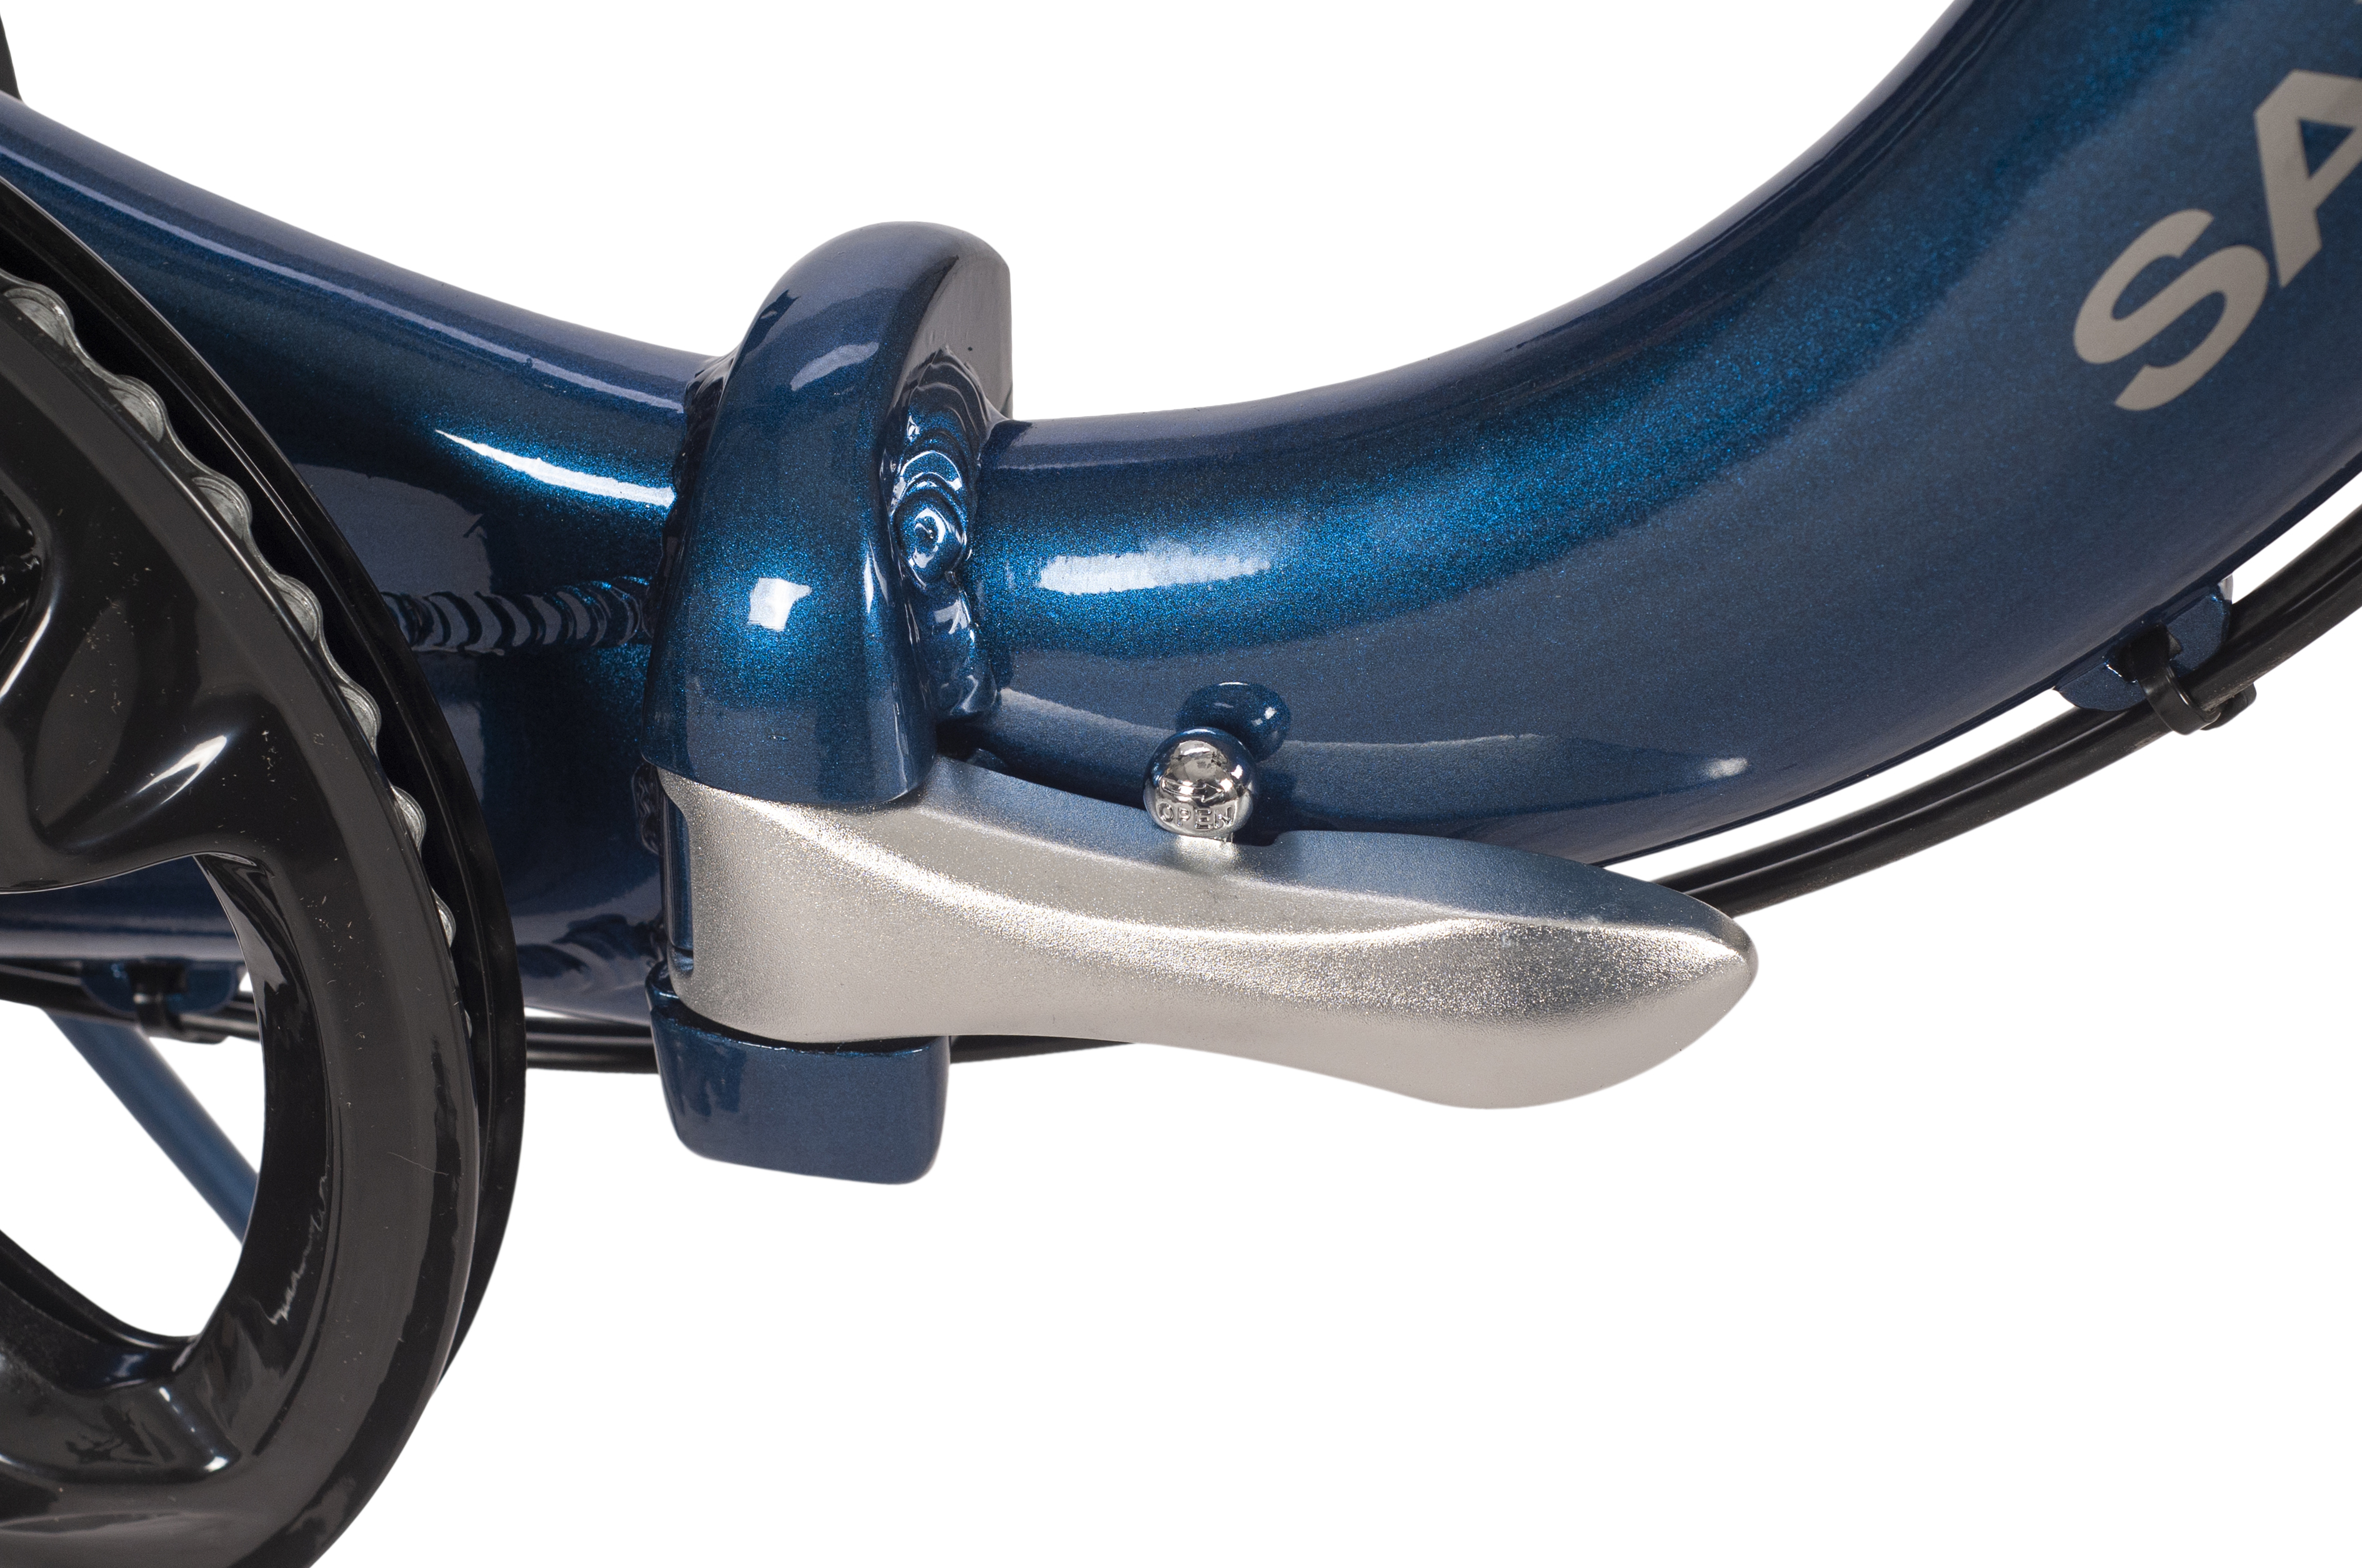 SAXXX Foldi Plus 2.0 E-Faltrad Rücktrittbremse Vorderradmotor 2. Wahl gebraucht Stahlgabel 3 Gang Wave nachtblau glänzend